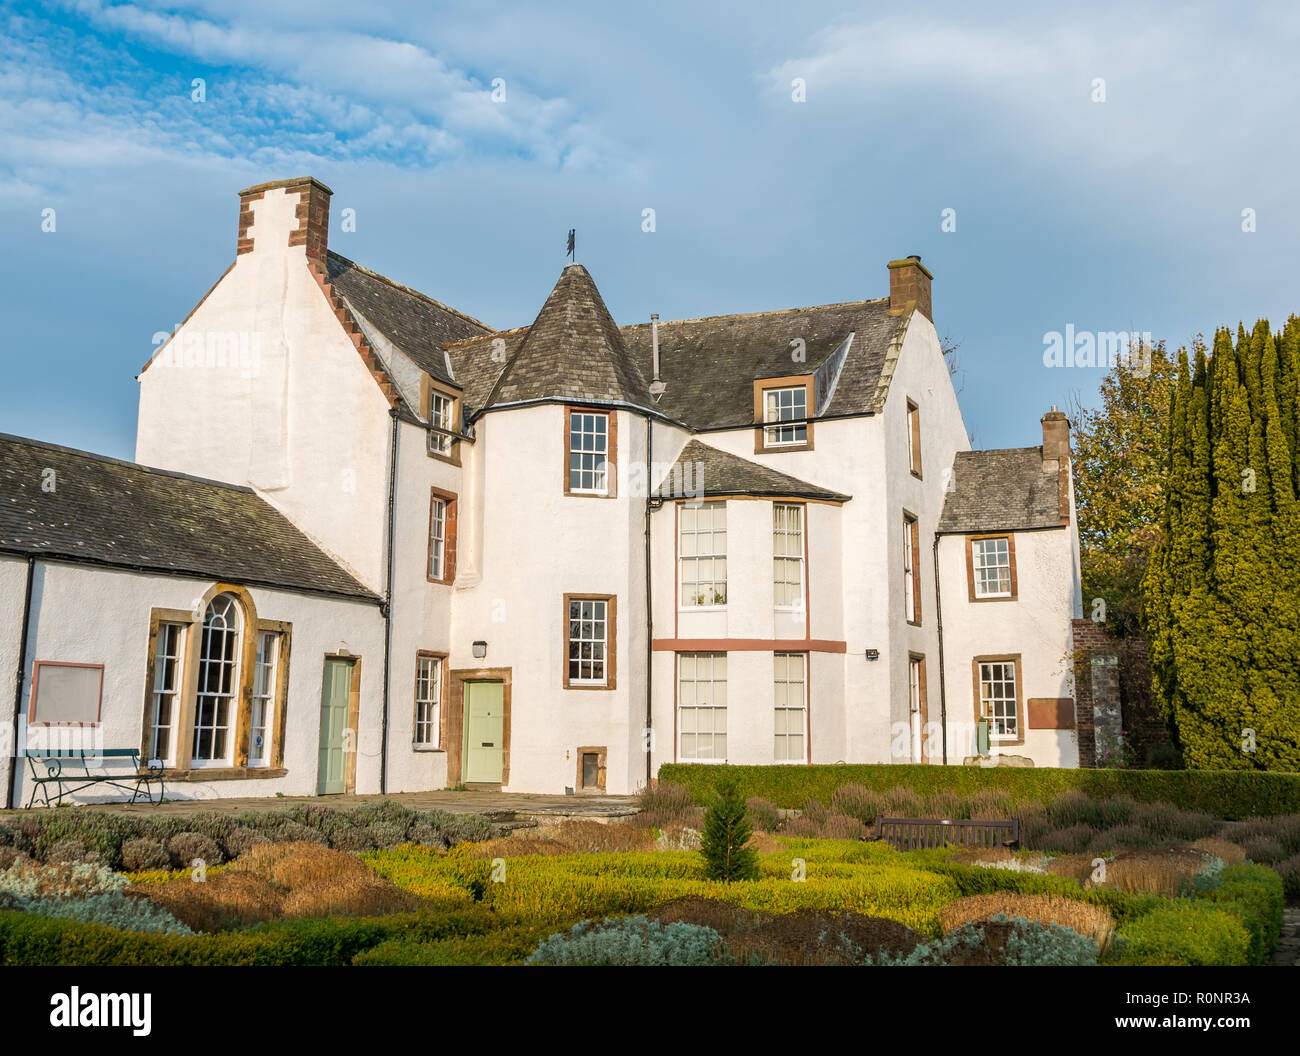 17th century Haddington House and sunken garden, St Mary's Pleasance, Sidegate, East Lothian, Scotland, UK Stock Photo